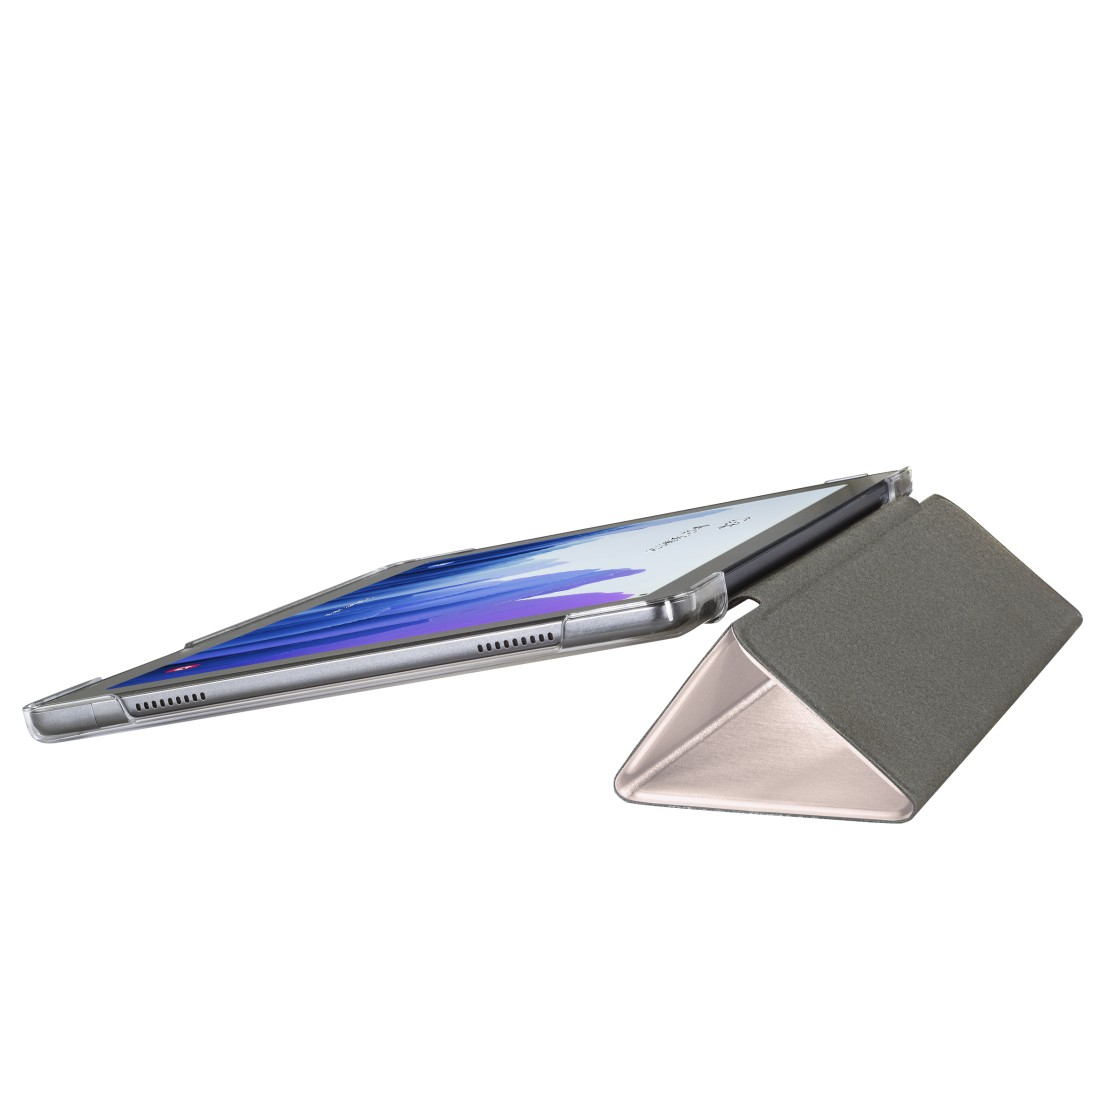 Hama Tablet-case Fold Clear voor Samsung Galaxy Tab A8 10.5, roze